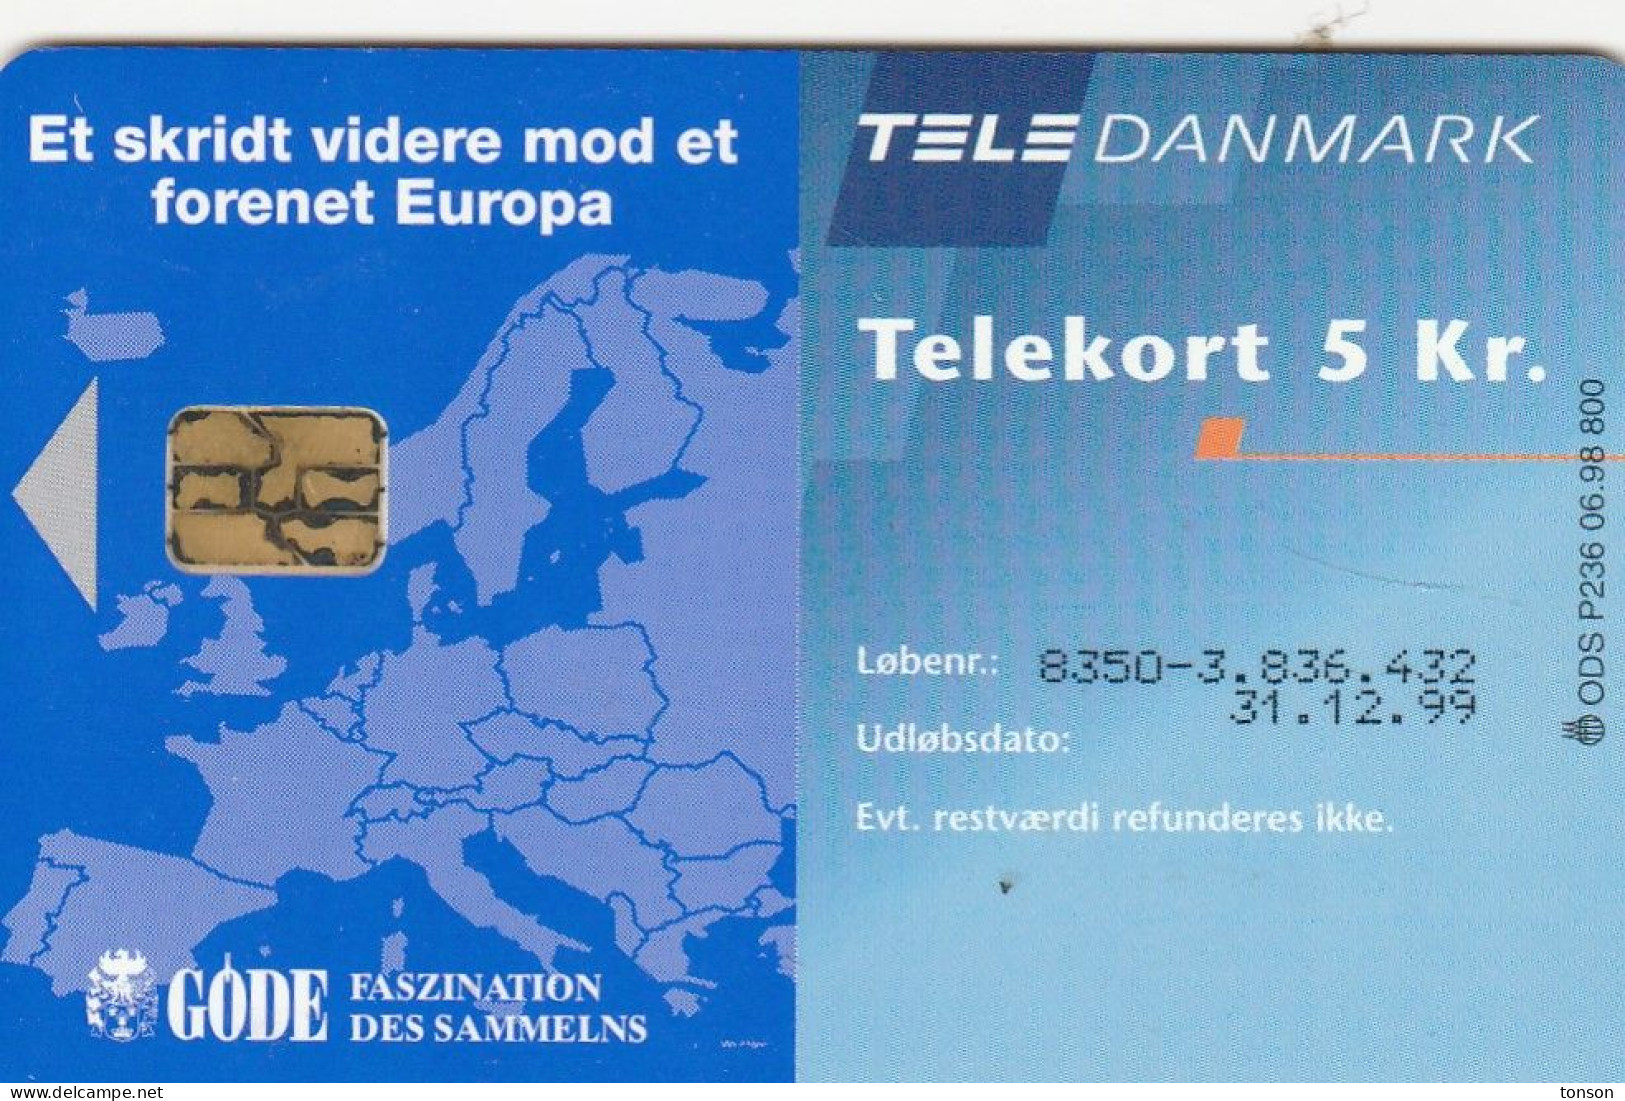 Denmark, P 236, Ecu - Ireland, Mint, Only 800 Issued, 2 Scans.   Please Read - Danemark